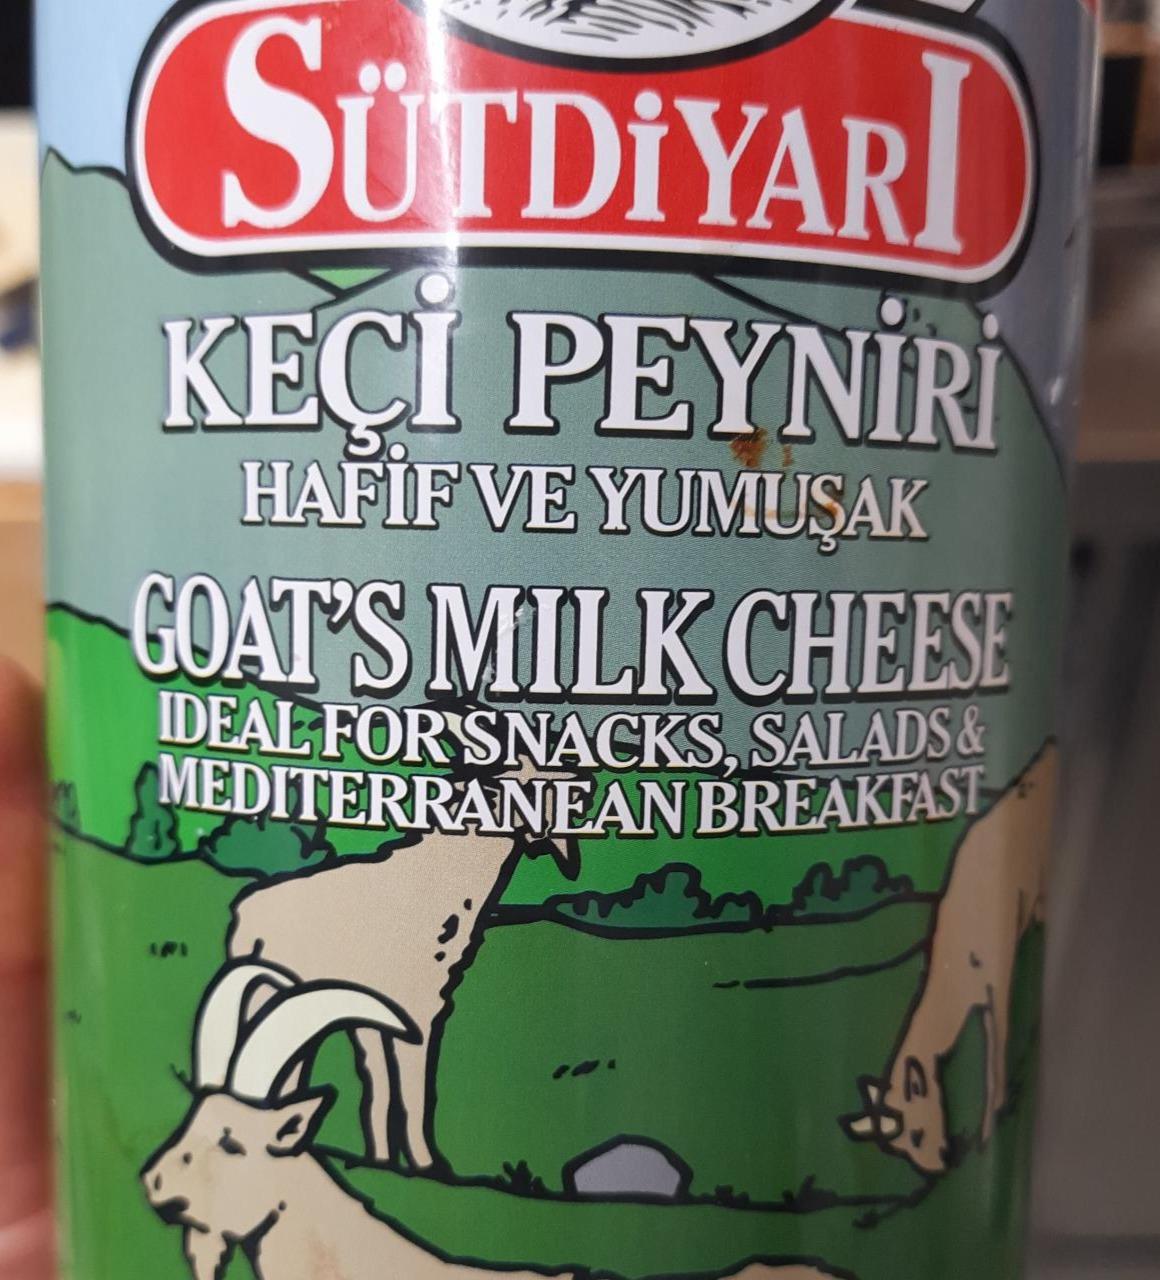 Fotografie - Keçi Peyniri Goat's milk cheese Sütdiyari